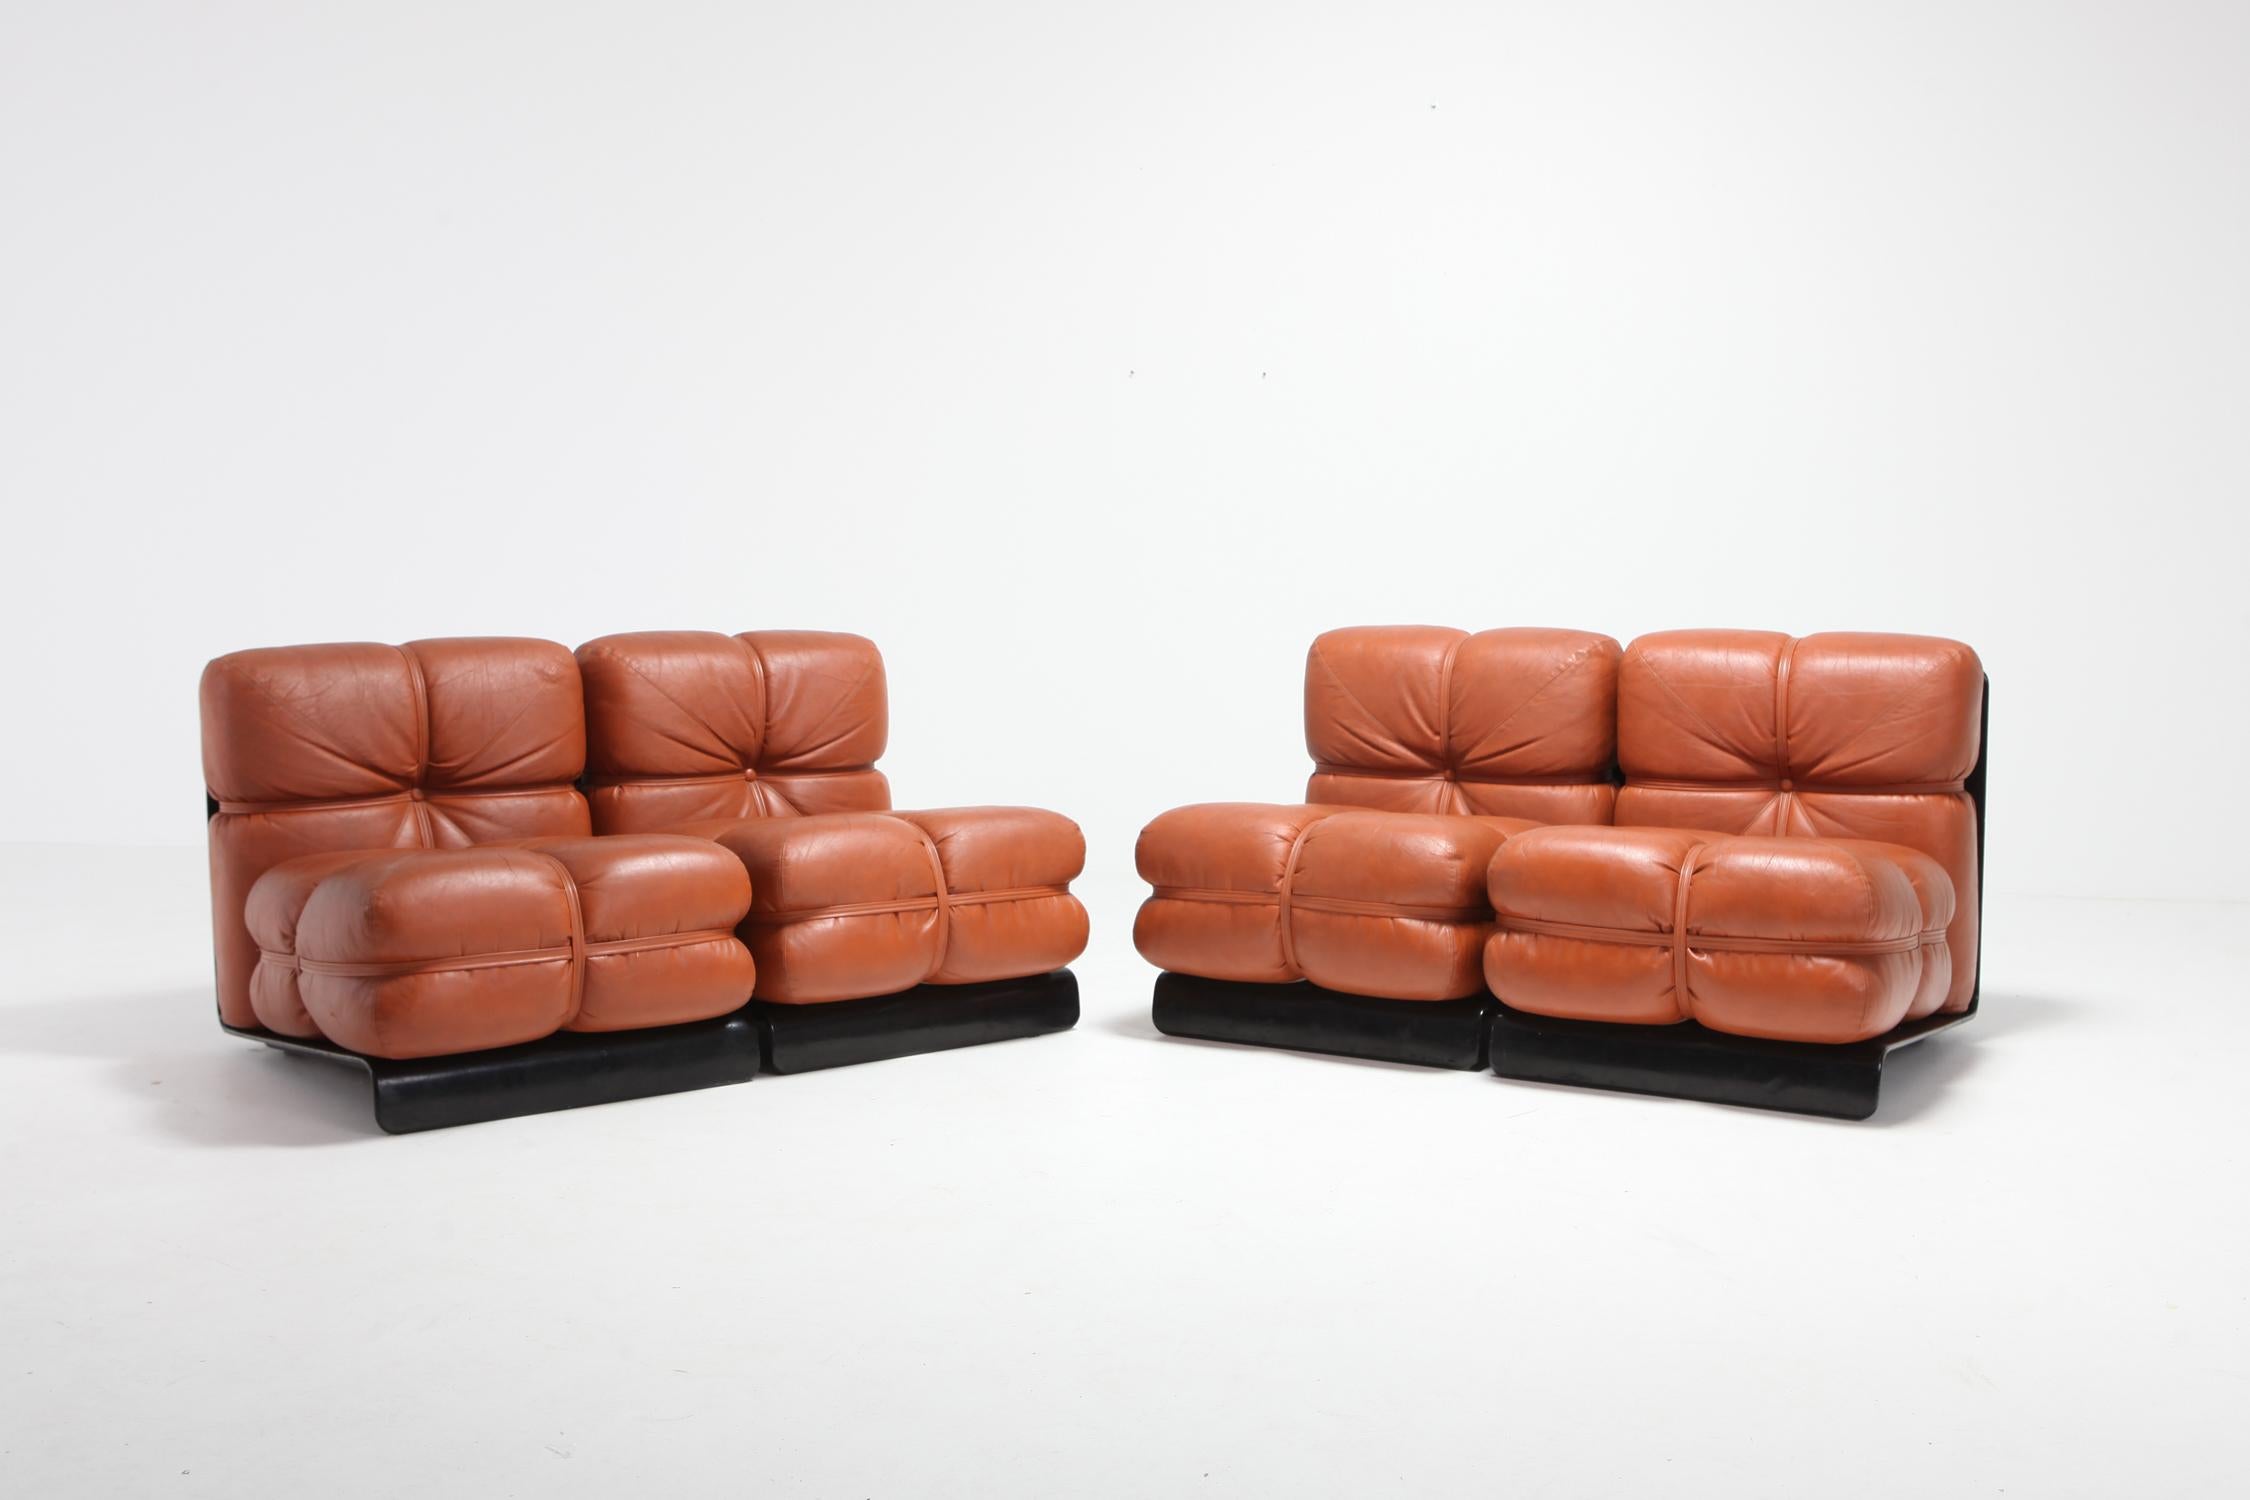 Leather Carla Venosta Ultra Rare 'San Martino' Seating Elements for Full